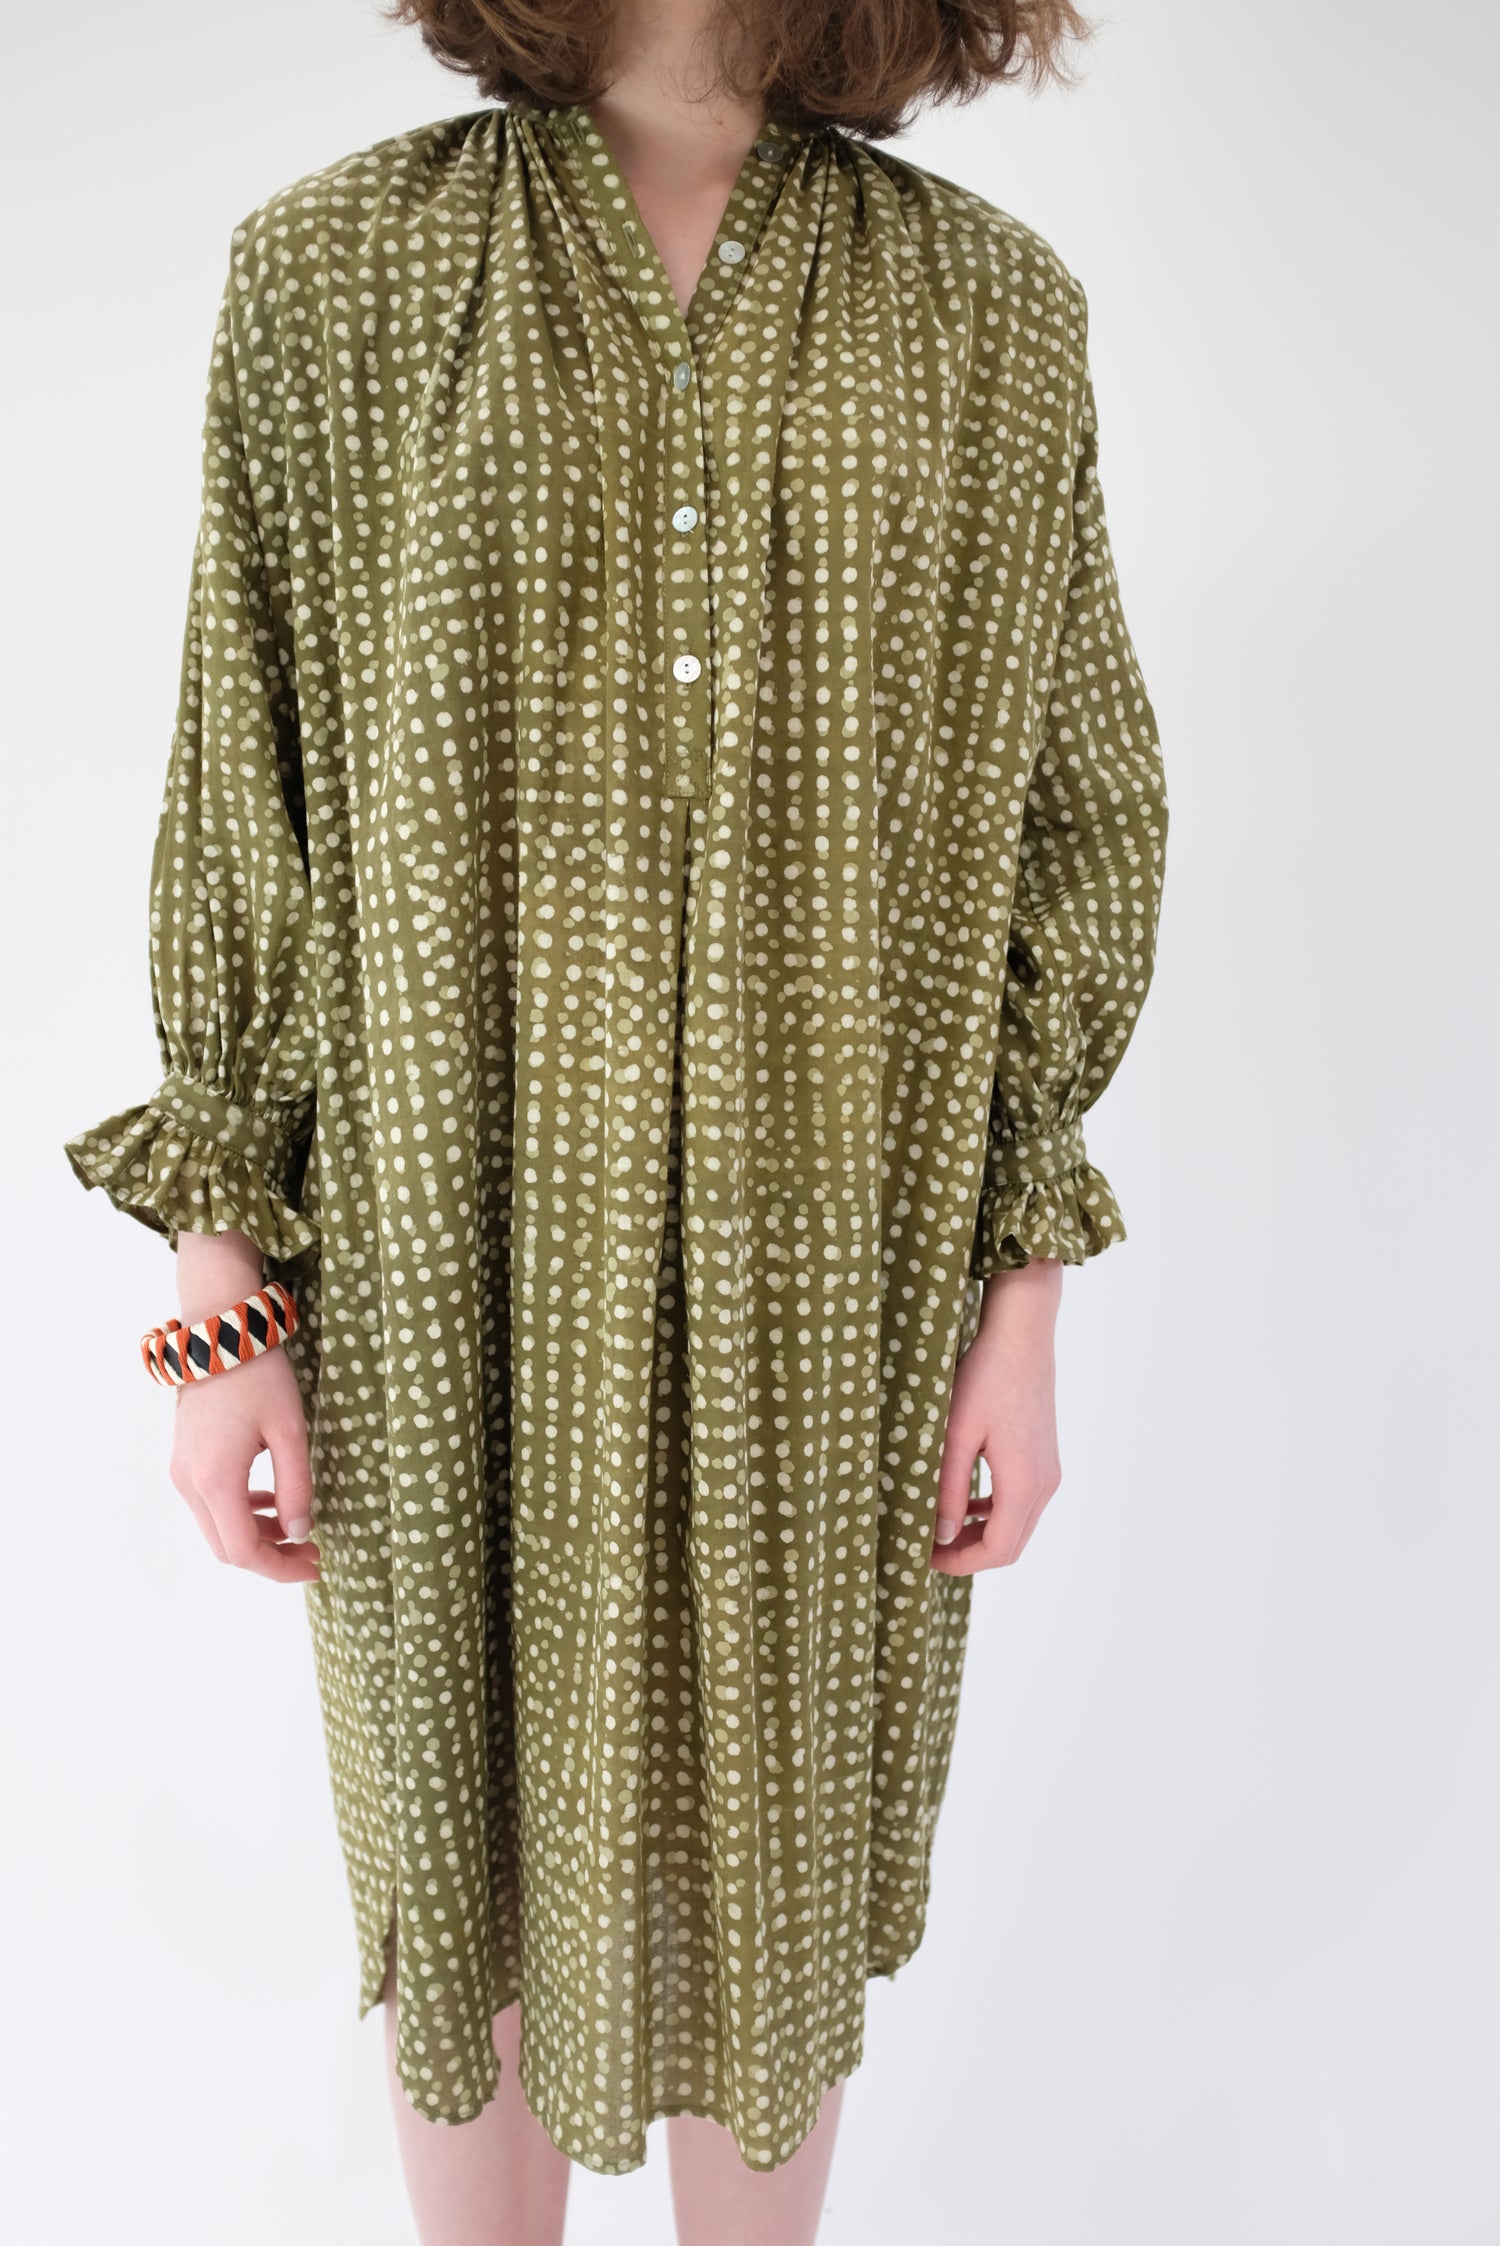 Heinui Dino Dress Olive Green Dots